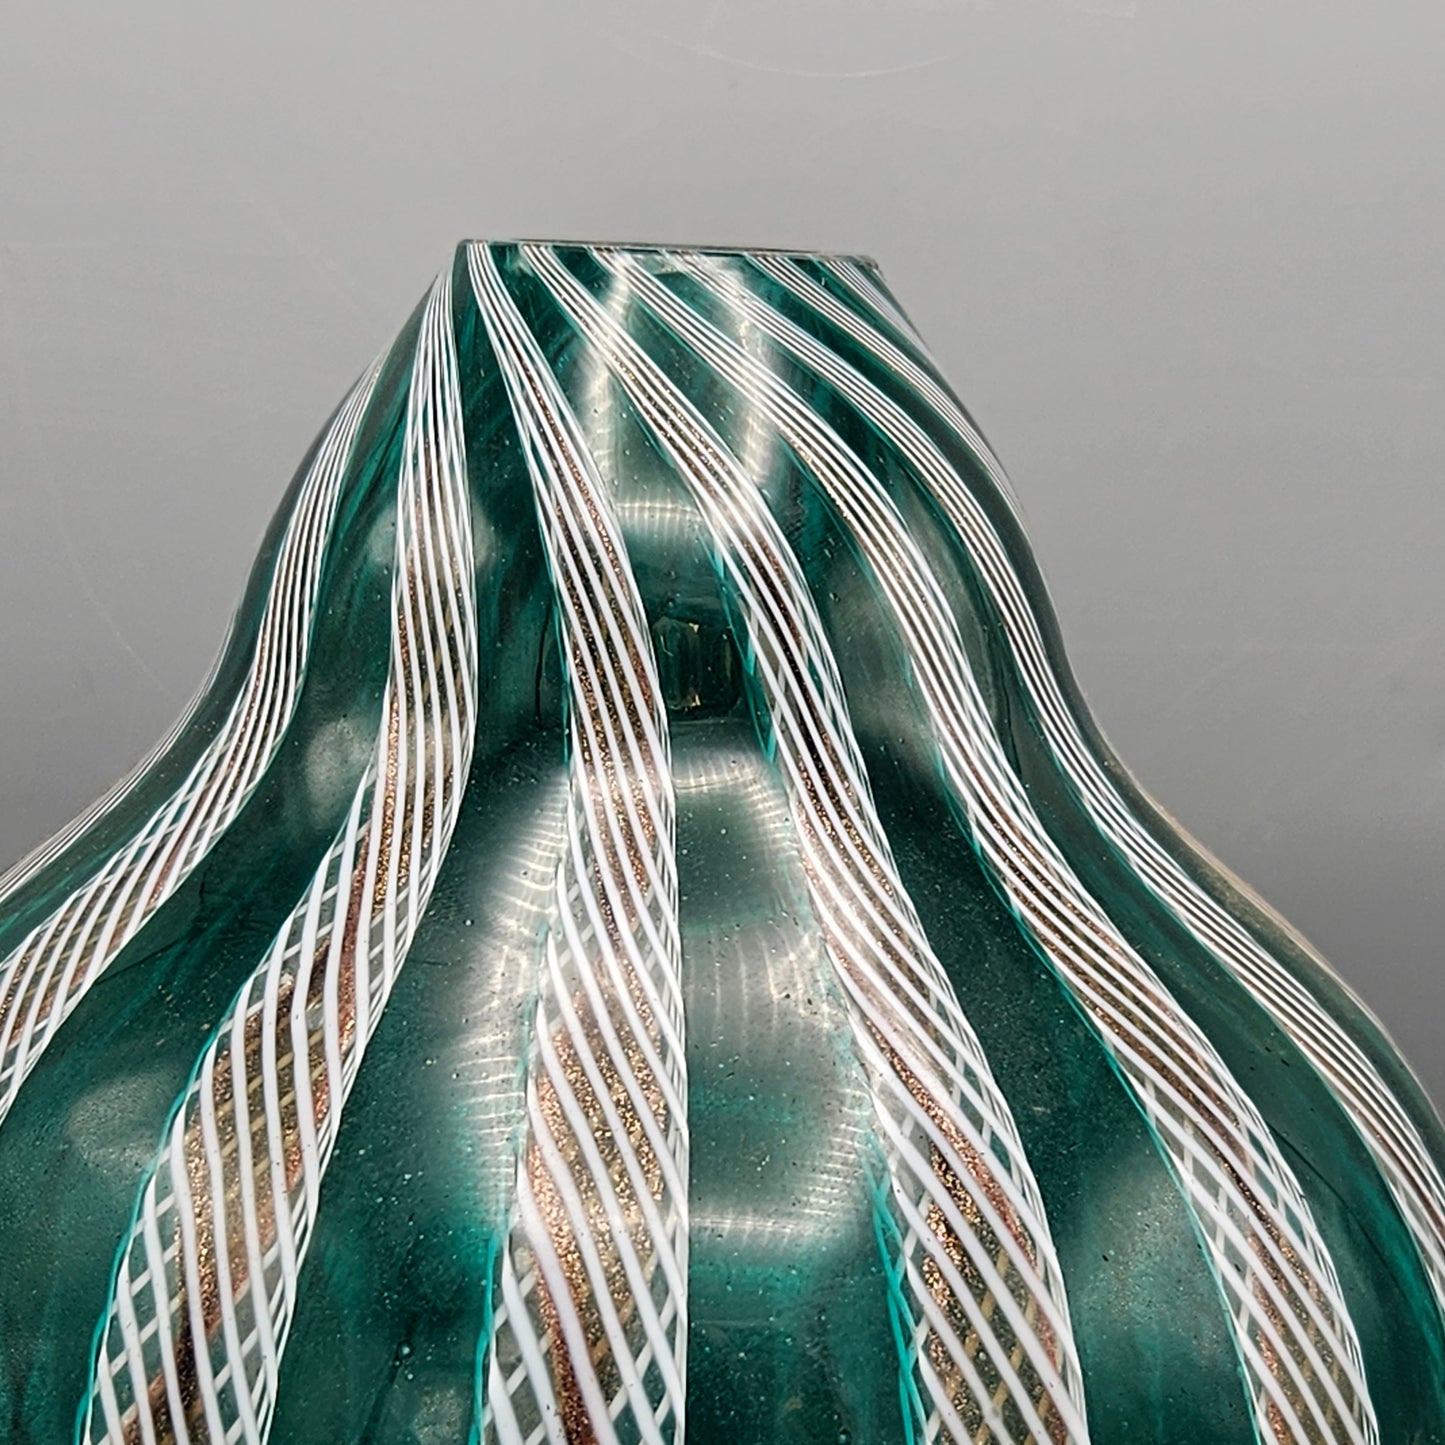 Vintage Paul’s Gifts Murano Candy Stripe Latticino Glass Lamp Body Shade - Green